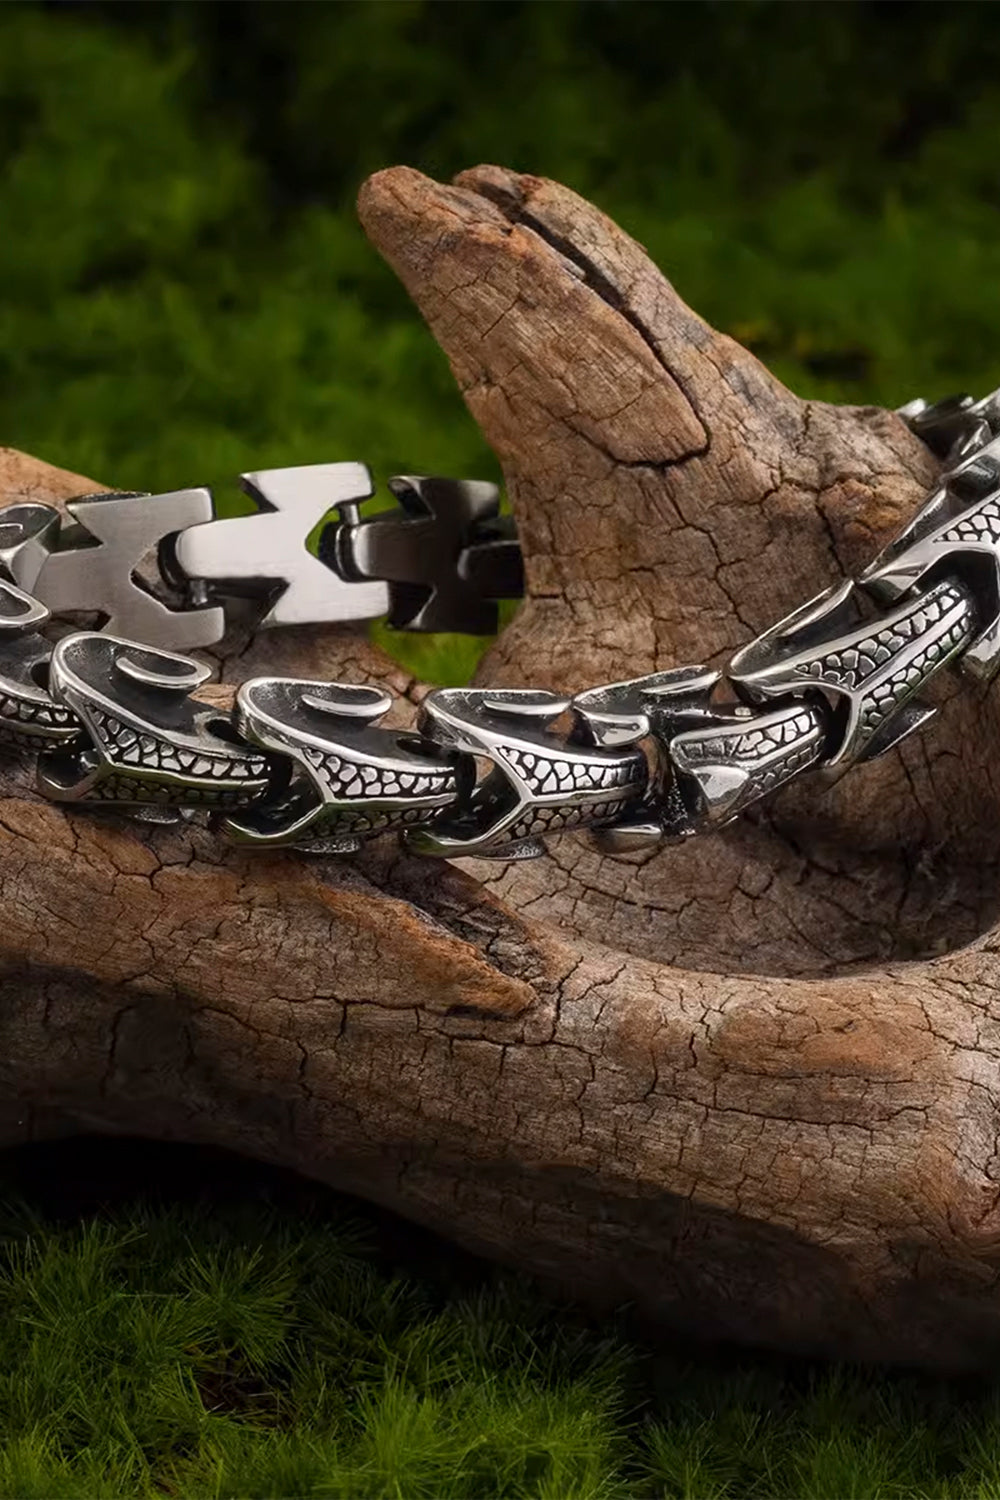 Jörmungandr Viking Dragon Scales Link Bracelet Norse Mythology